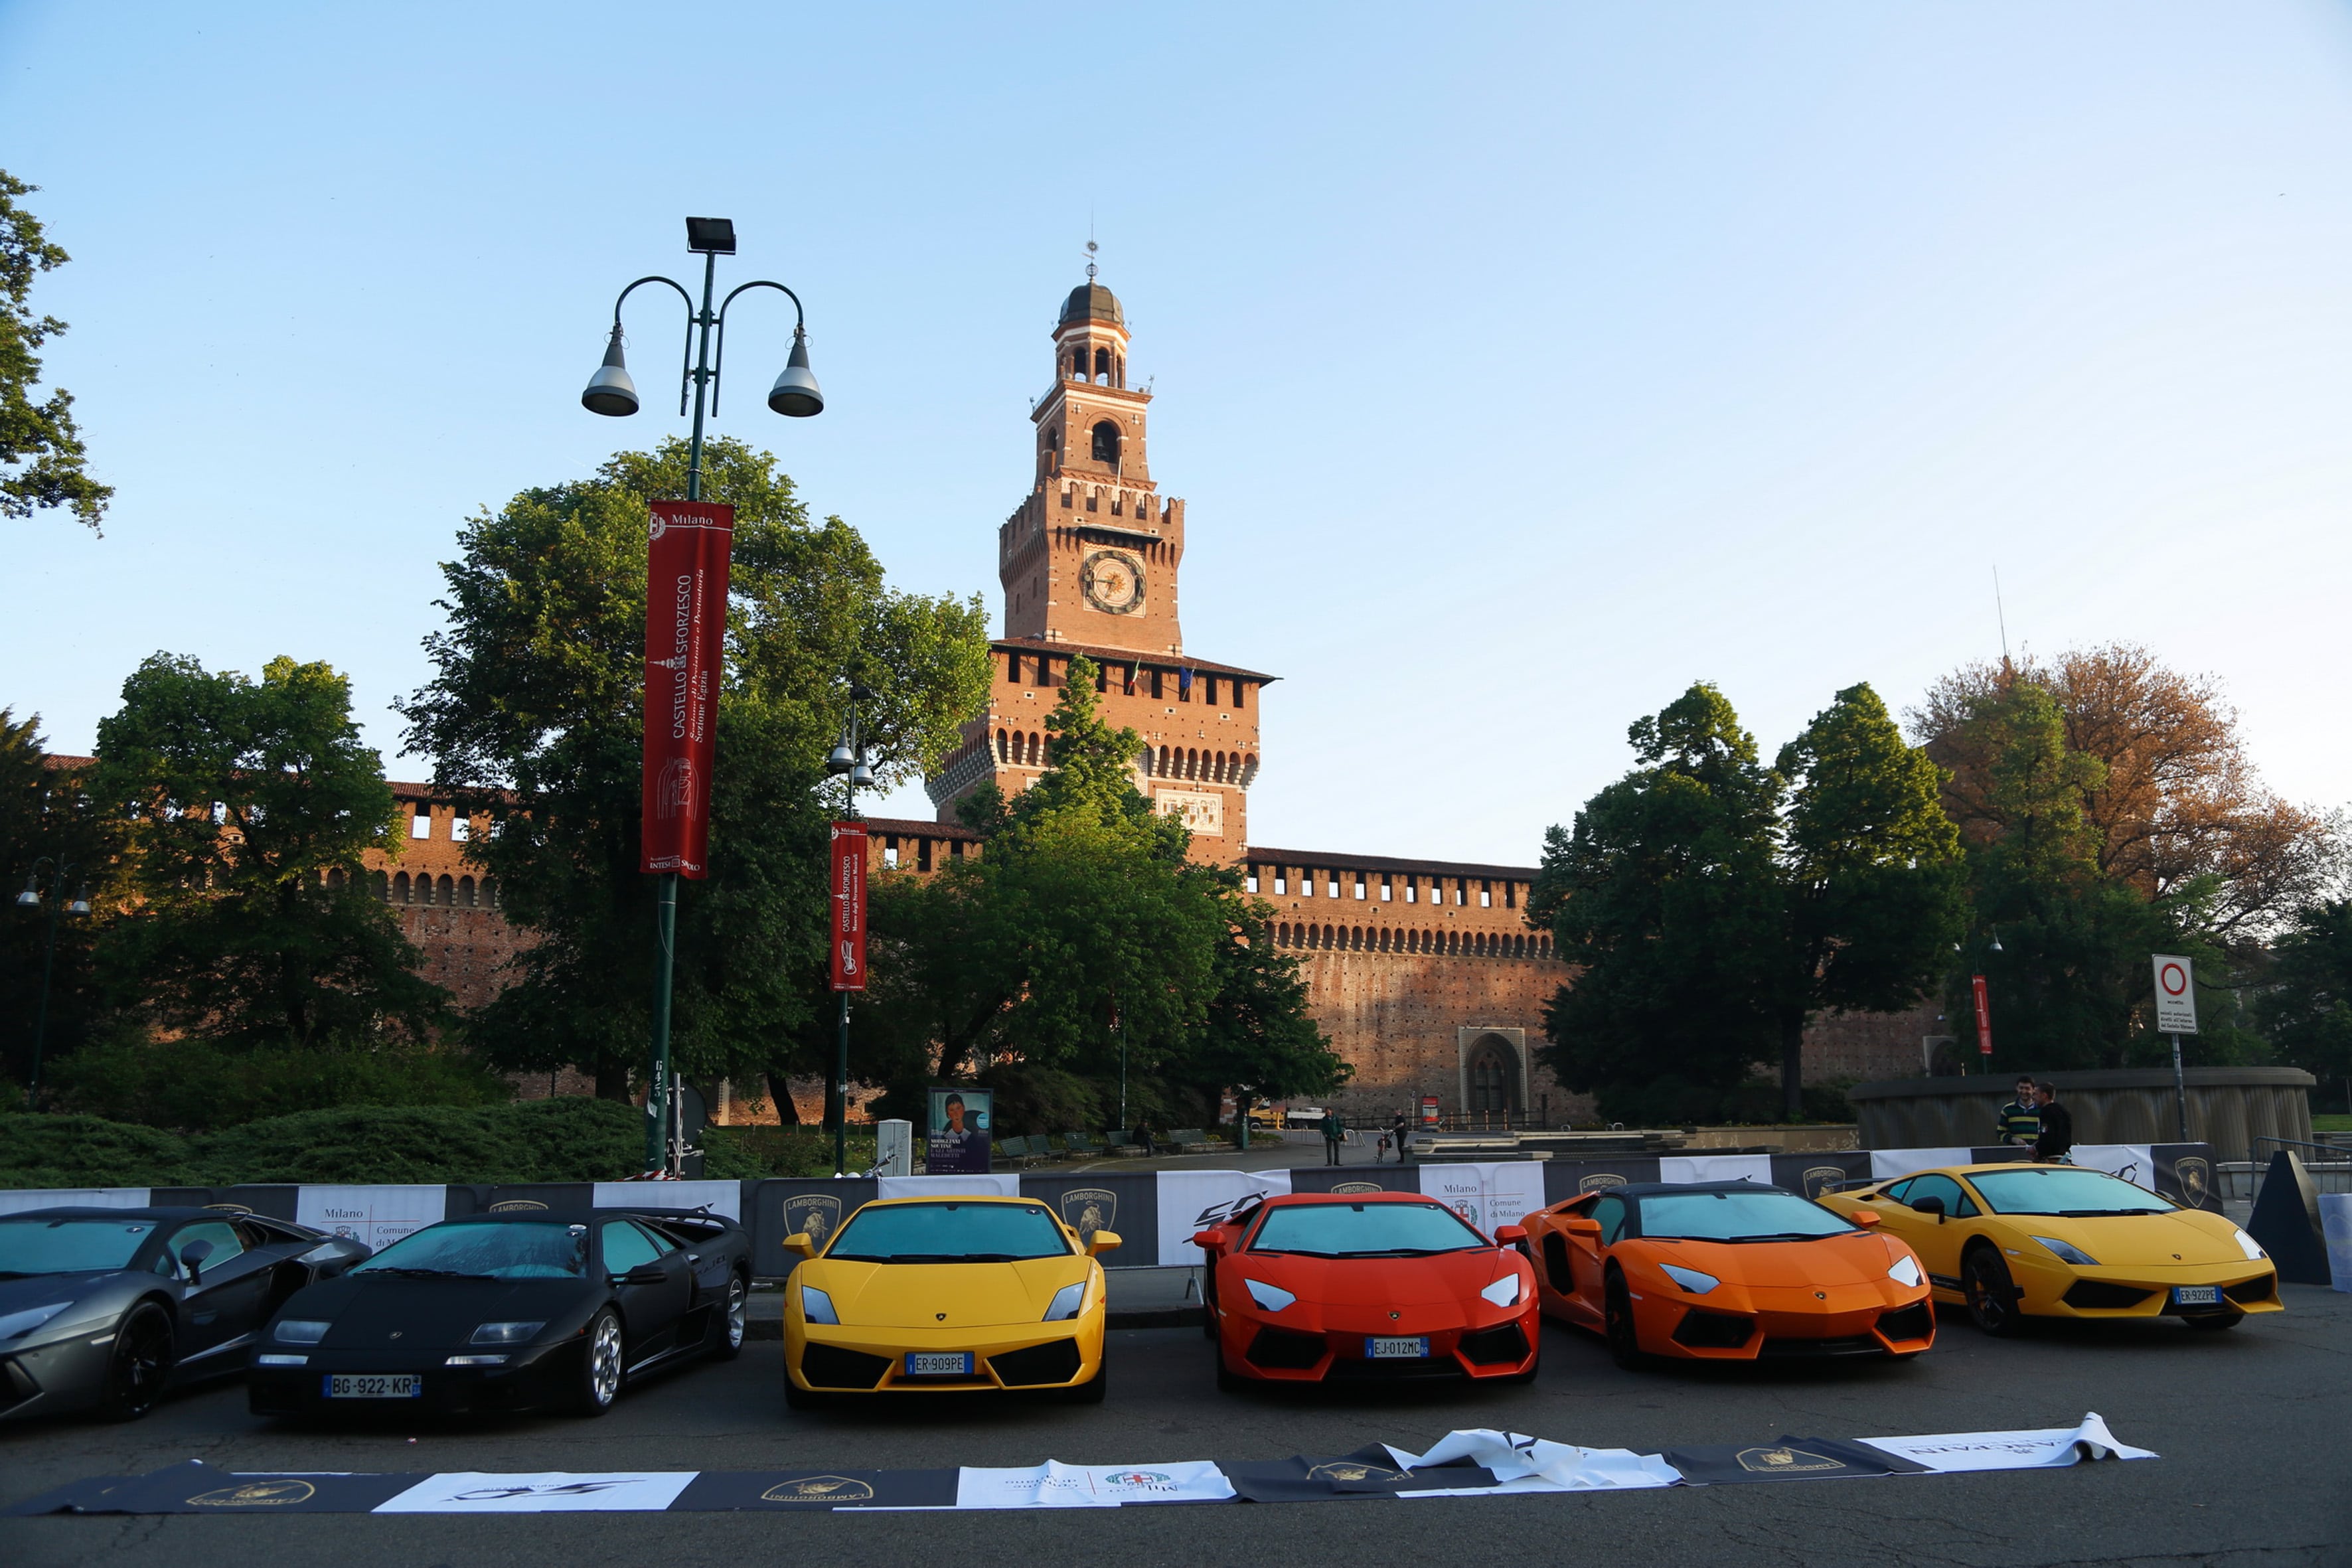 Lamborghini 50th Anniversary Grand Tour Begins – 350 Lambos Celebrating | CarNewsCafe.comCarNewsCafe.com